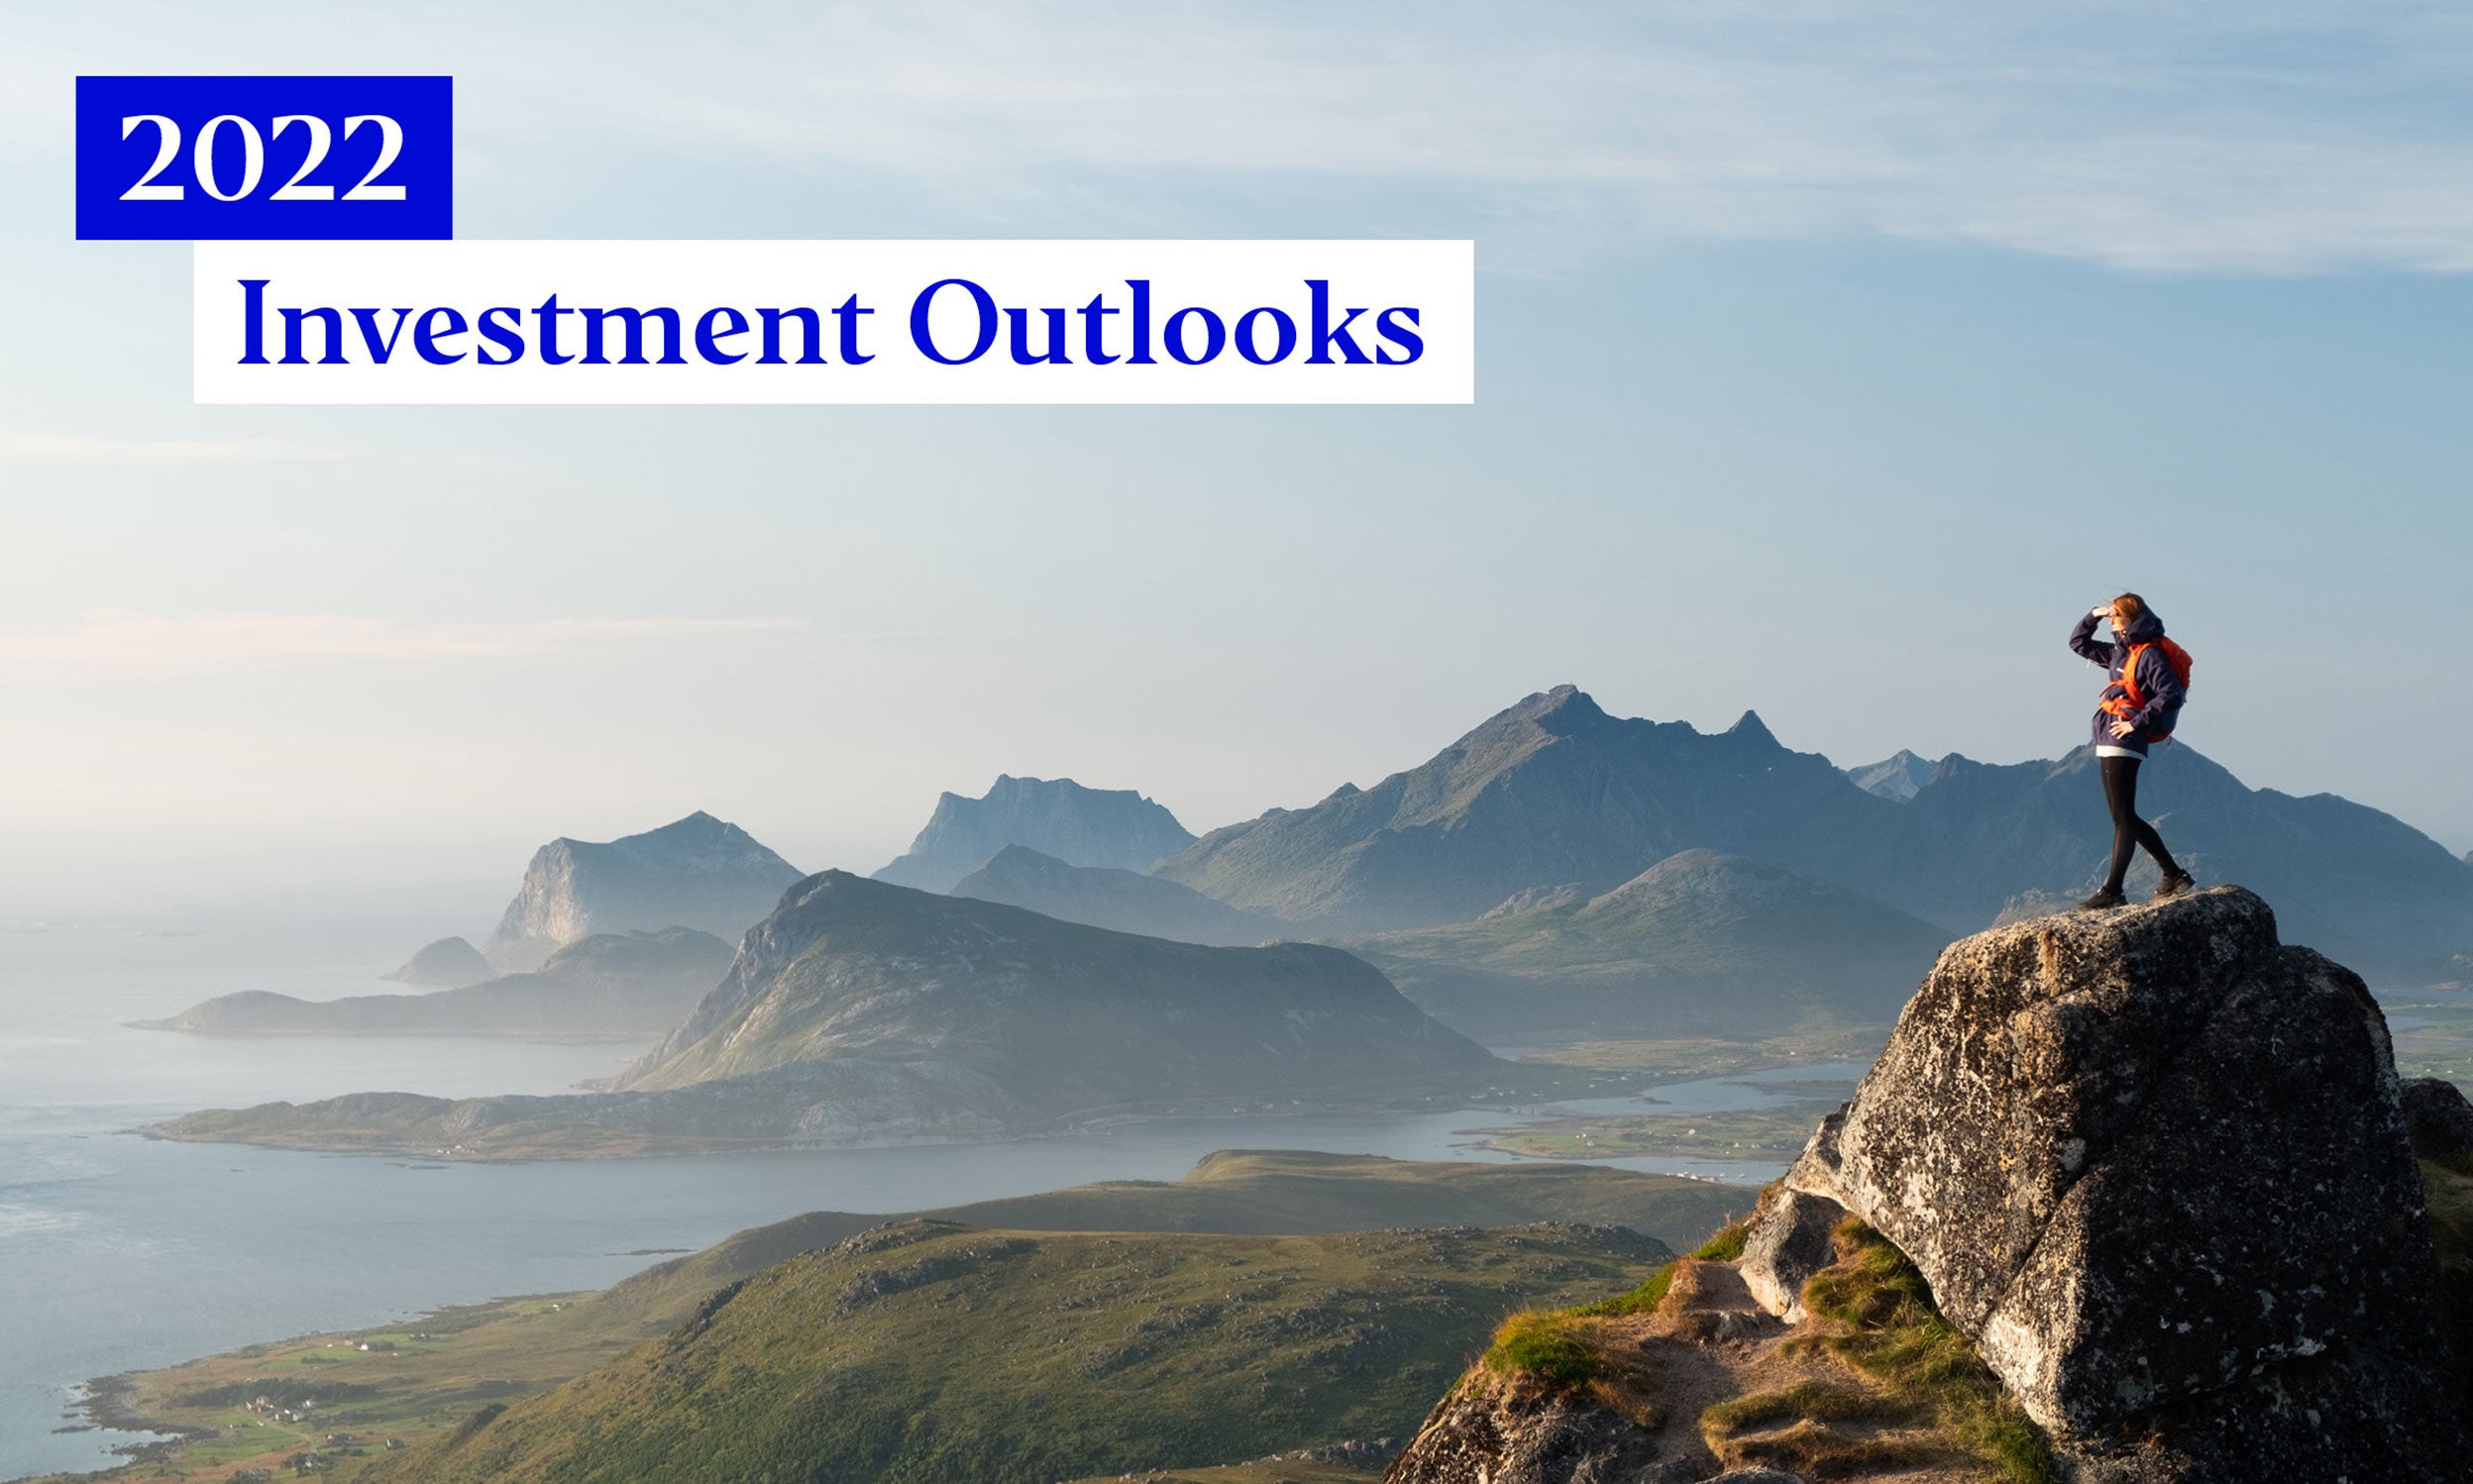 Investment outlooks